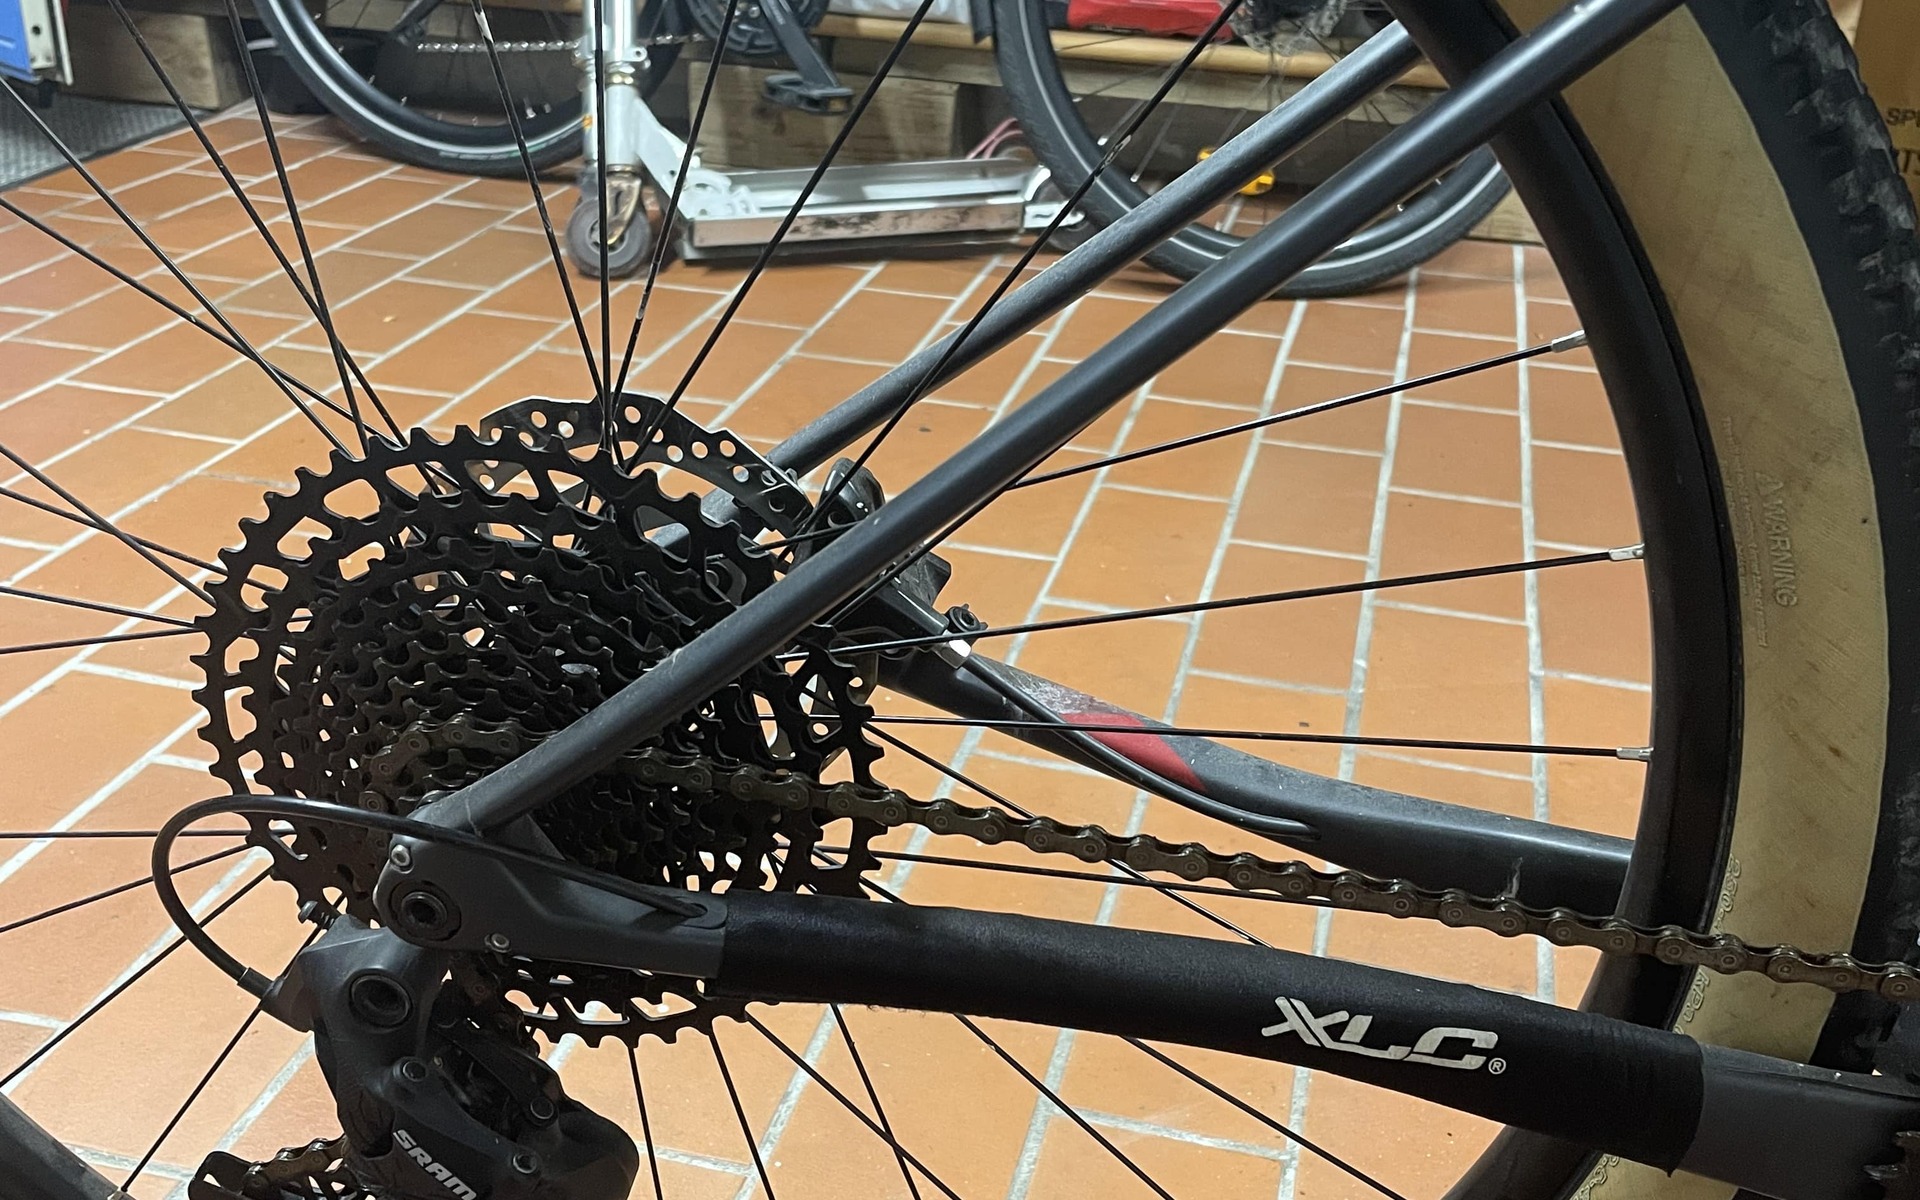 Mountain Bike Merida Big Nine 3000 Carbonio, Usata, 2020, Venezia